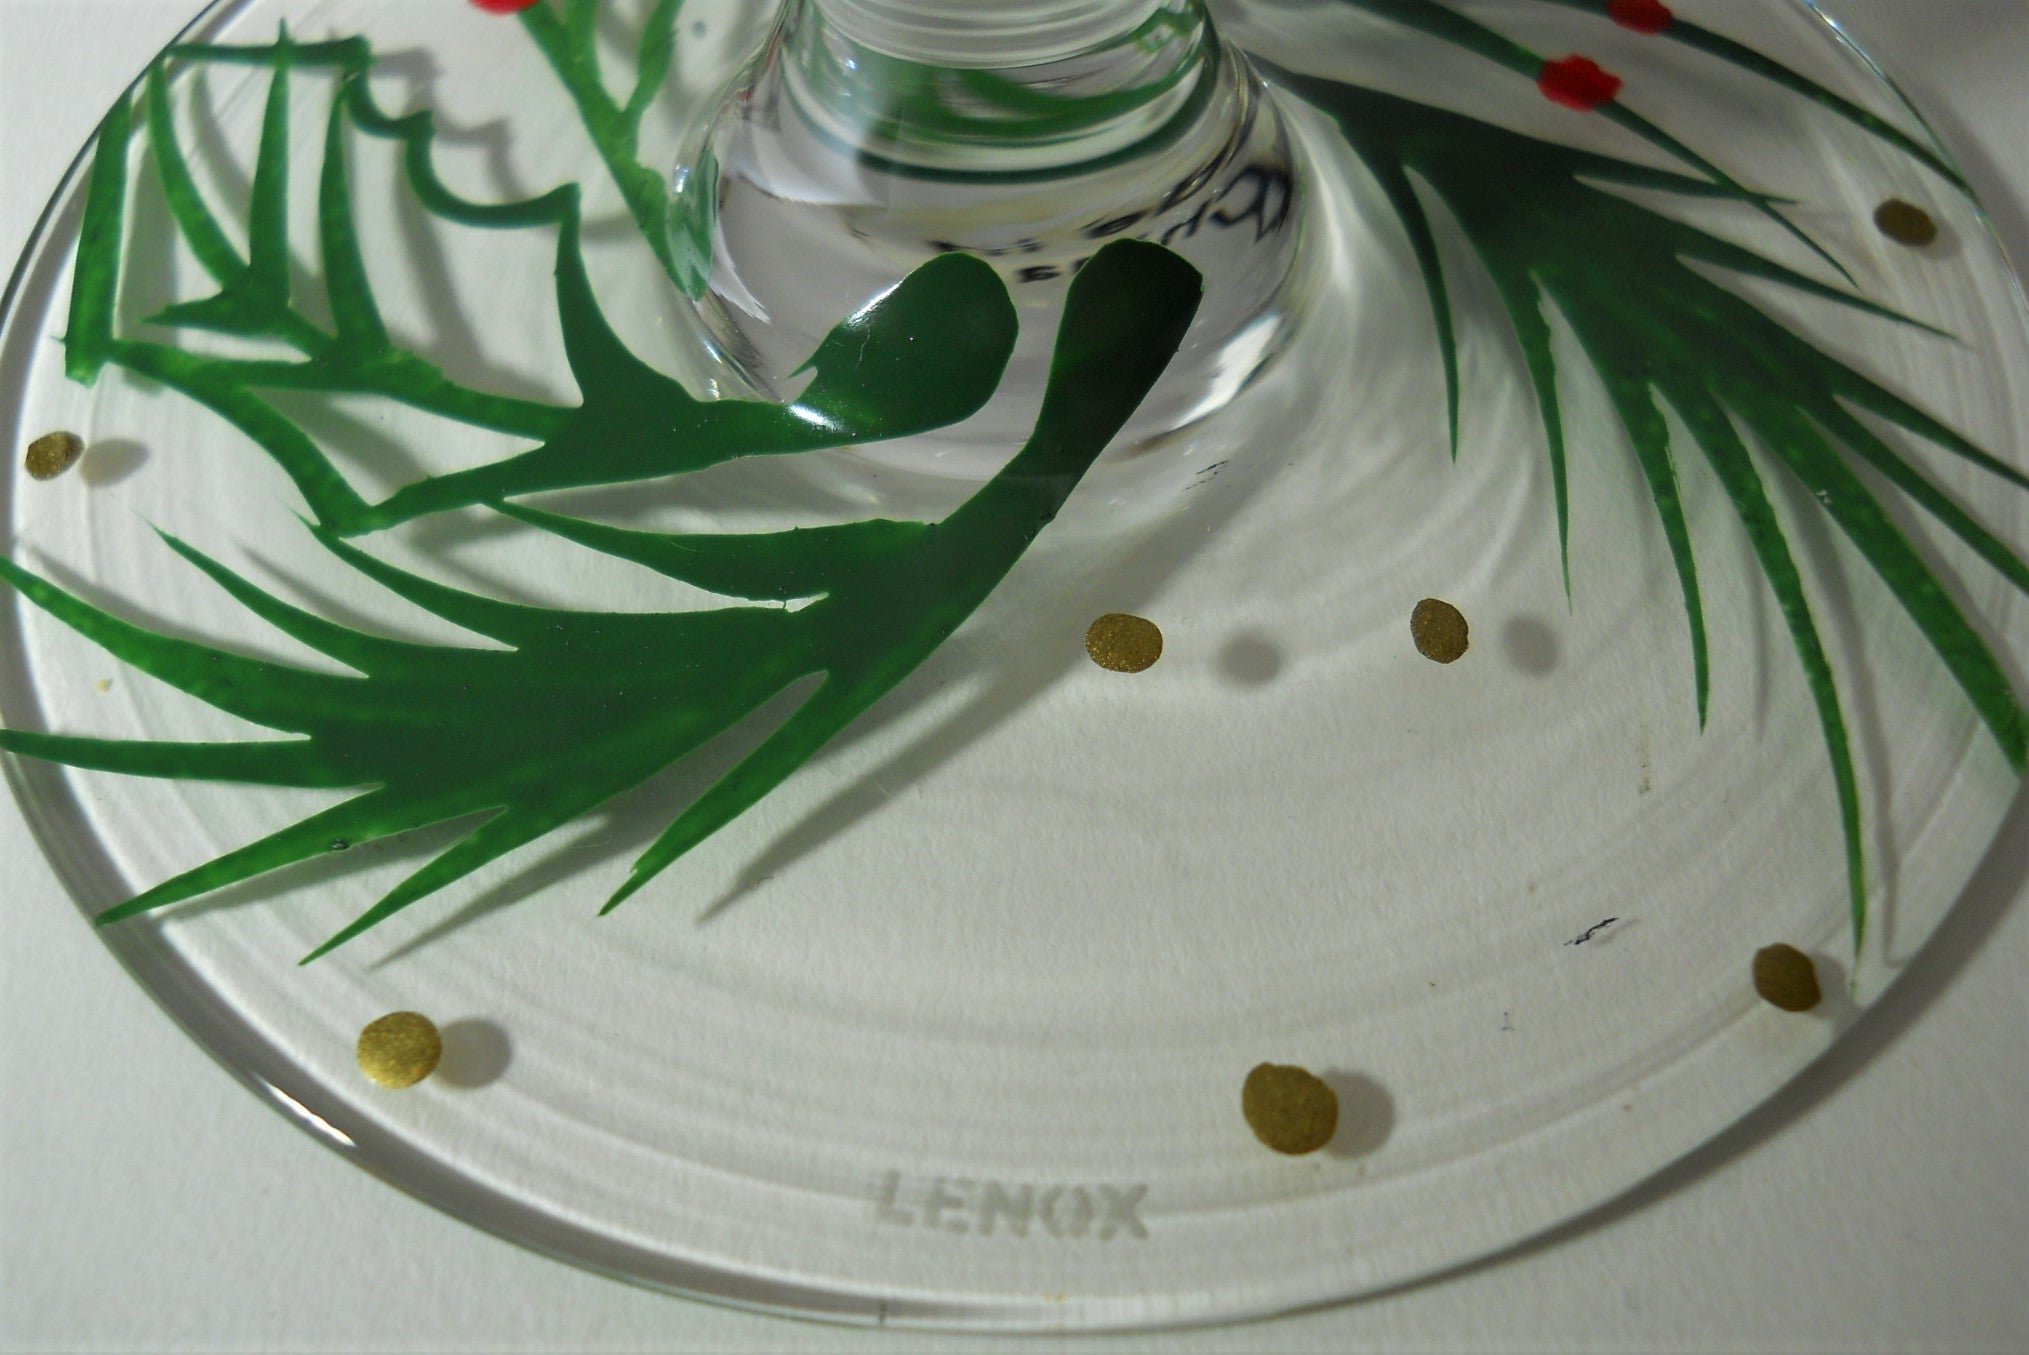 Contemporary Lenox Holiday Gems Green & Amethyst Wine Glasses Set